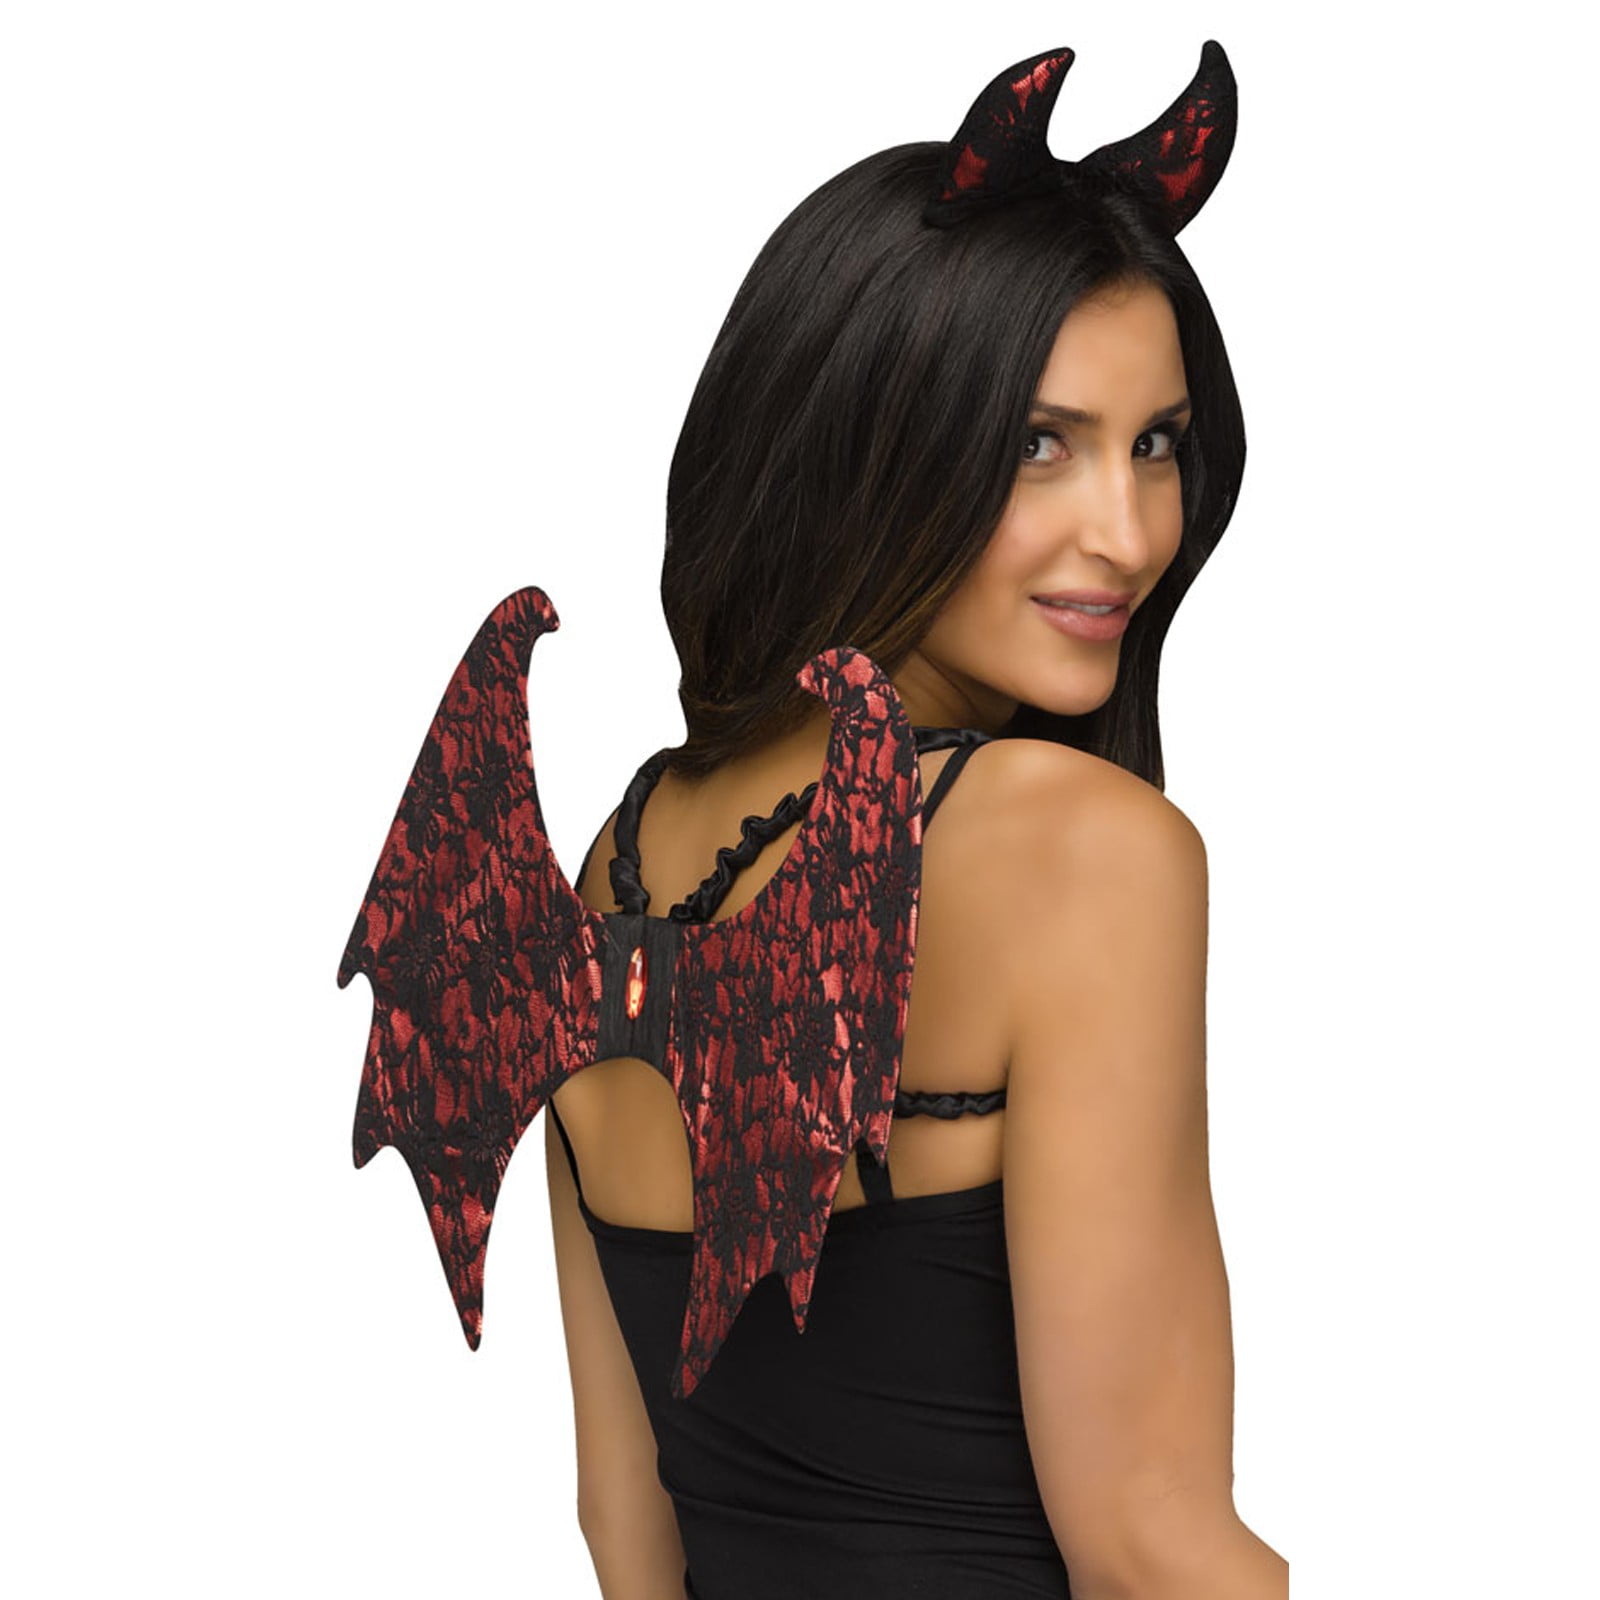 Details about   2x Black Ram Horns Halloween Cosplay Demon Evil Headband Adult Costume Dress Up